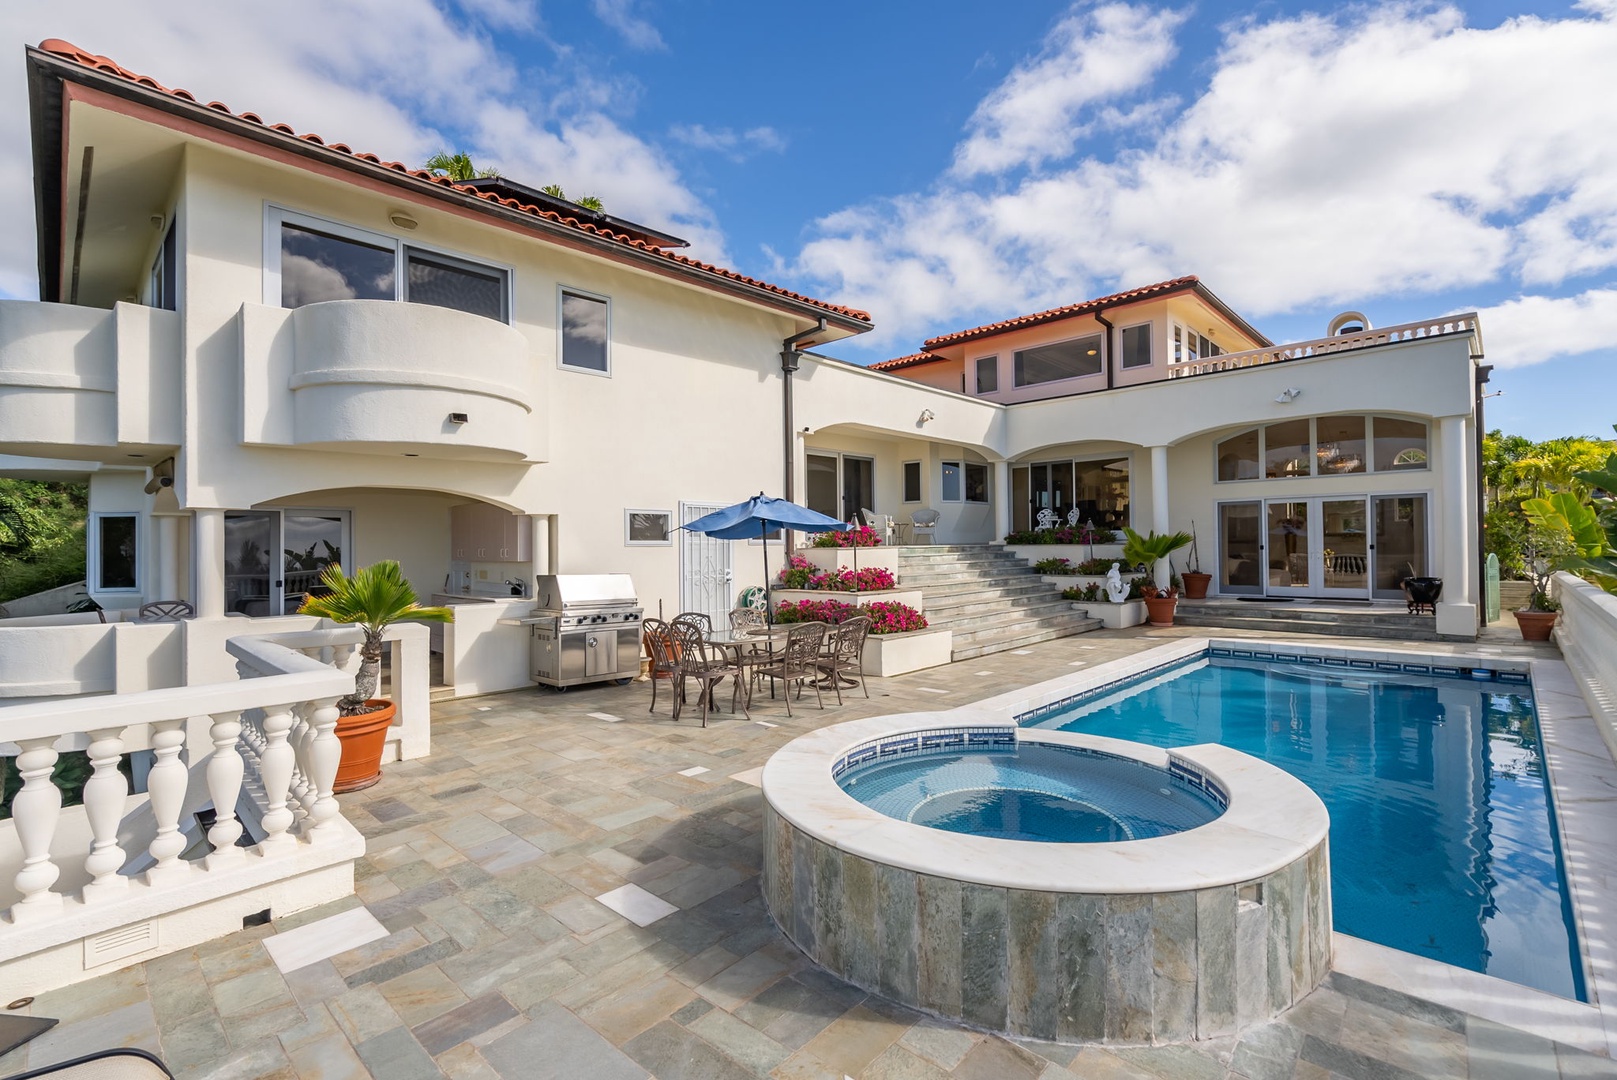 Honolulu Vacation Rentals, Hawaii Ridge Getaway - Spa pool on the roof deck with poolside loungers.